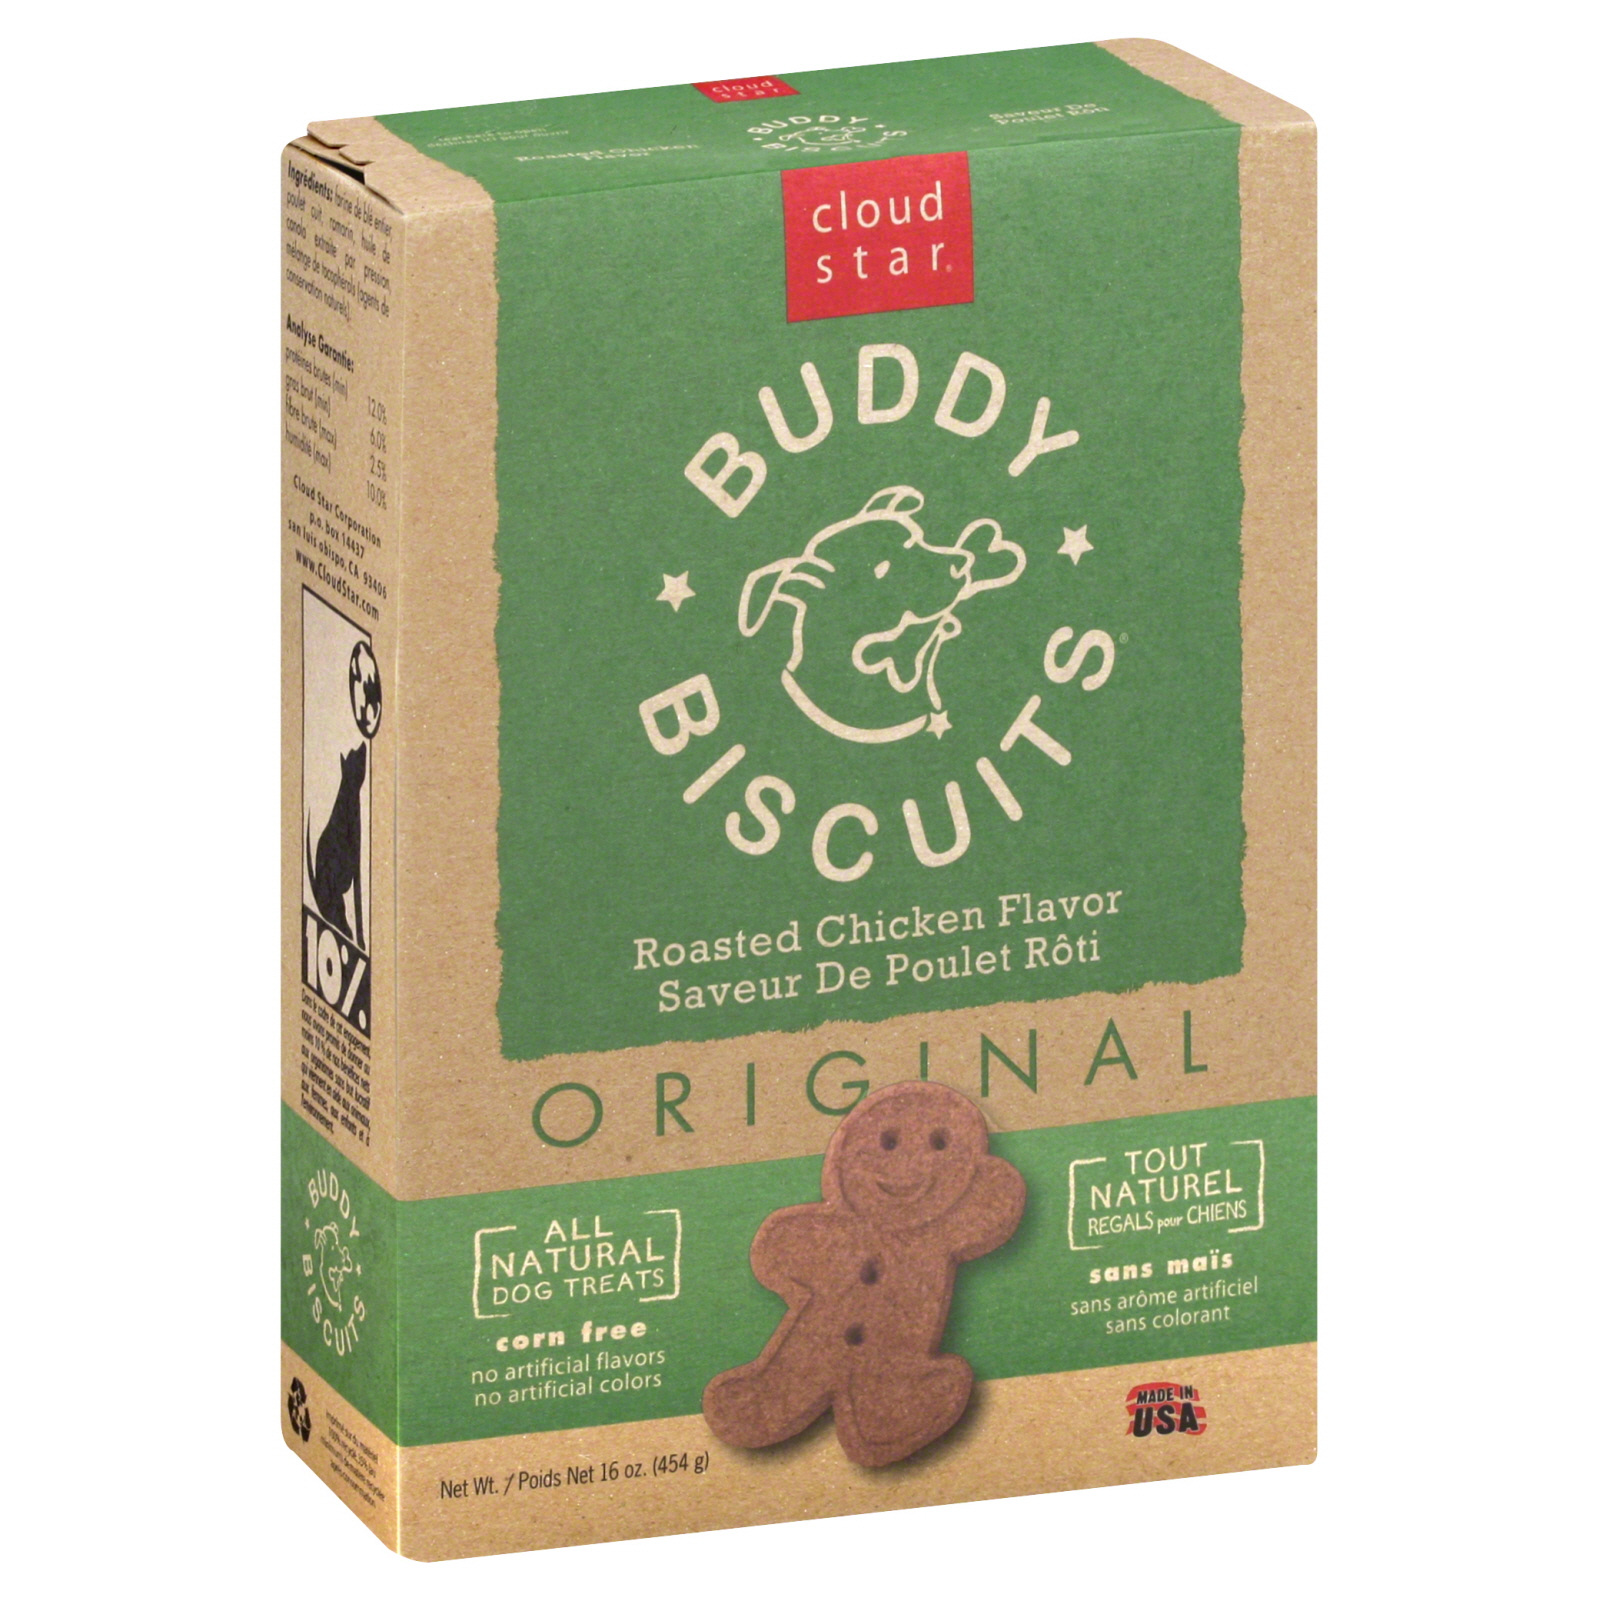 Cloud Star Buddy Biscuits Dog Treats, Original, Roasted Chicken Flavor, 16 oz (454 g)